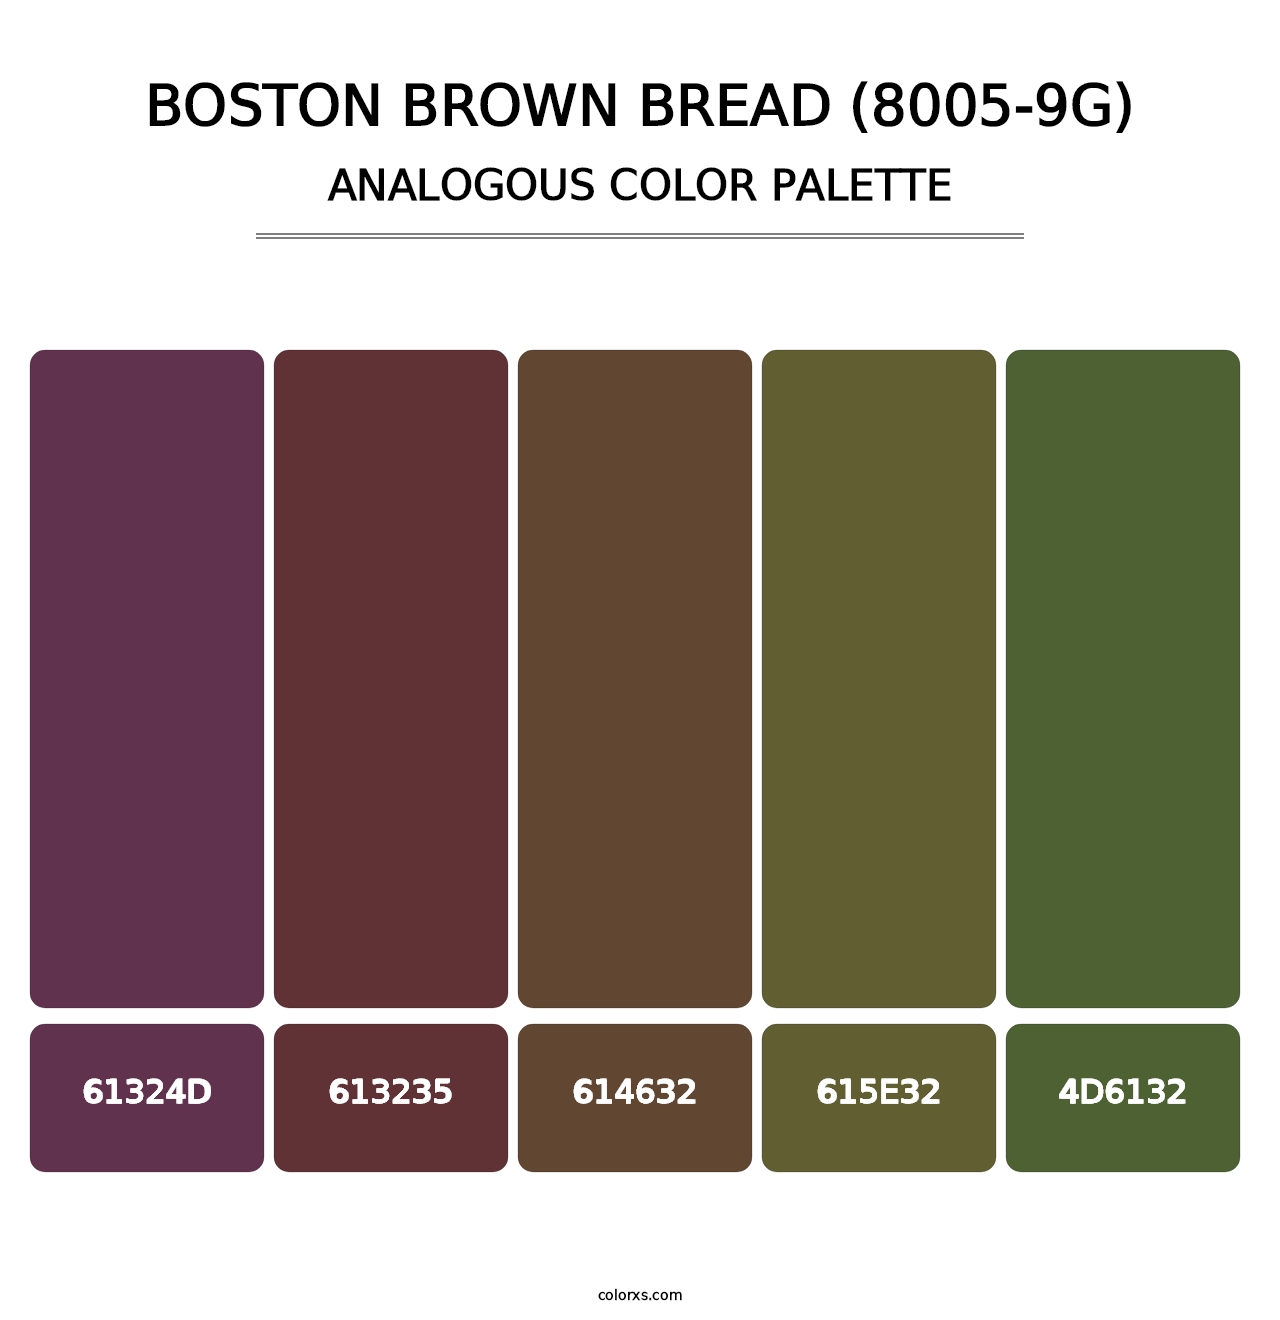 Boston Brown Bread (8005-9G) - Analogous Color Palette